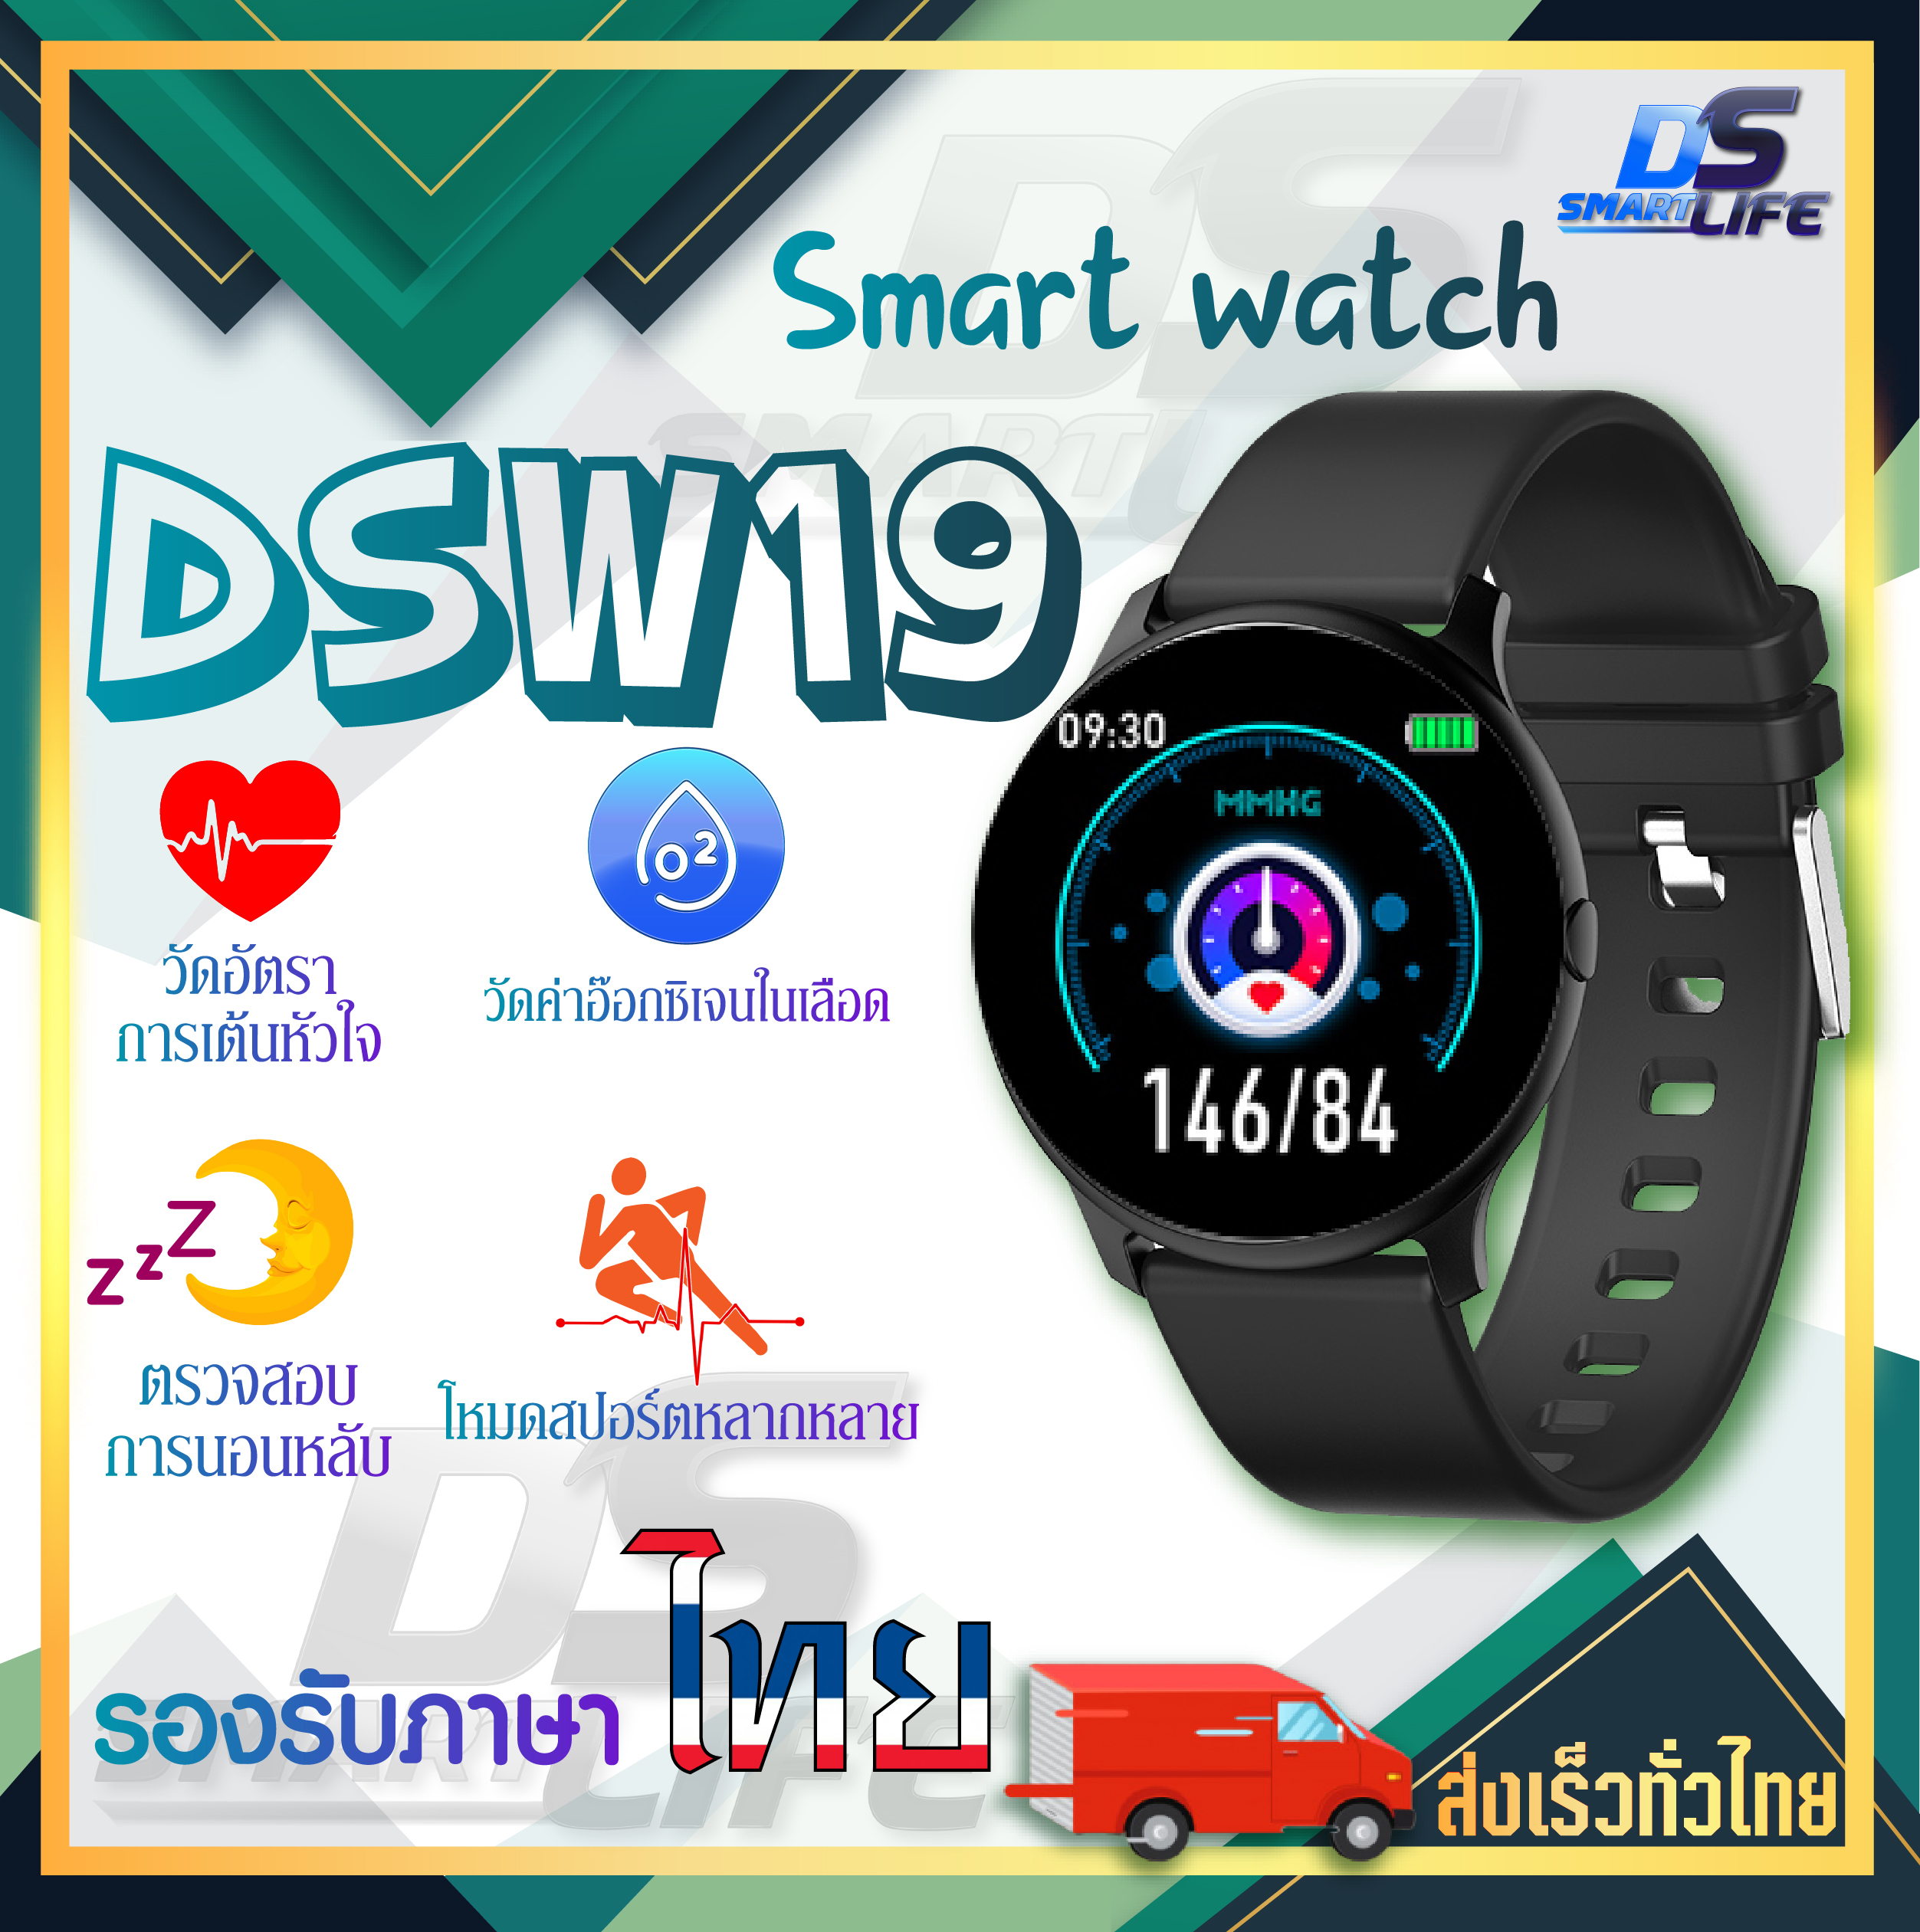 Smart Watch KW19 นาฬิกาสมาร์ทวอทช์ รุ่น นาฬิกาอัจฉริยะ ฟิตเนสแทรคเกอร์ สายรัดข้อมืออัจฉริยะ สายรัดข้อมือเพื่อสุขภาพ นาฬิกาข้อมือ นาฬิกา นาฬิกาแฟชั่น นาฬิการุ่นใหม่ Smart Band Fitness Tracker Smart Bracelet รุ่นใหม่ปี 2020